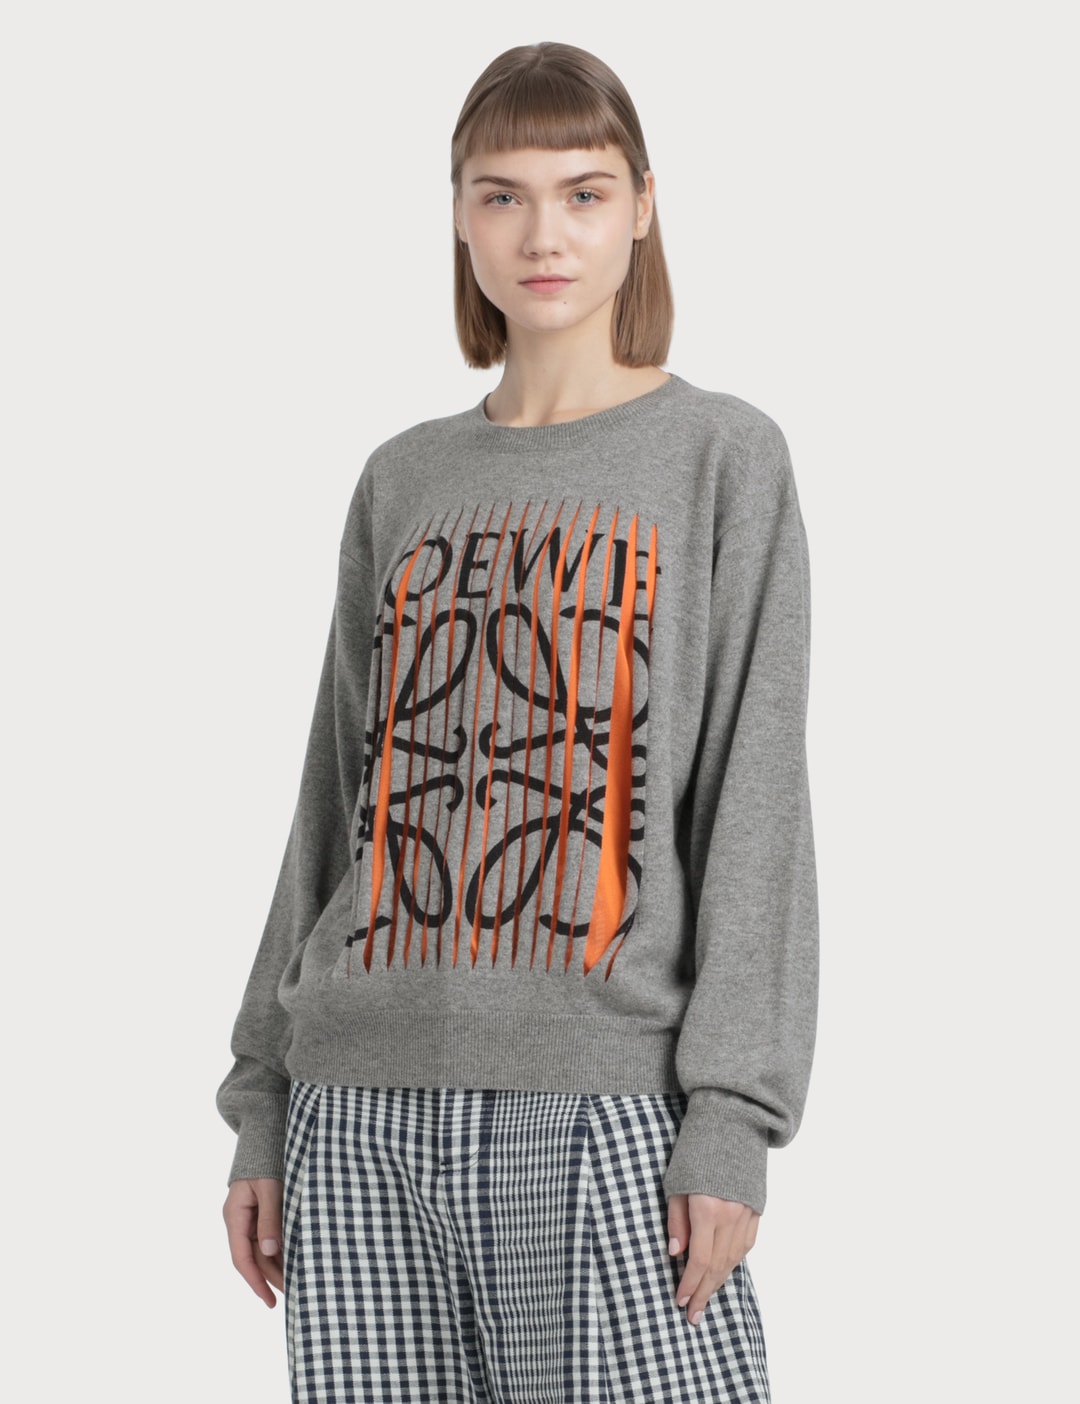 Loewe - Loewe Cut Sweater | HBX - Globally Curated Fashion and ...